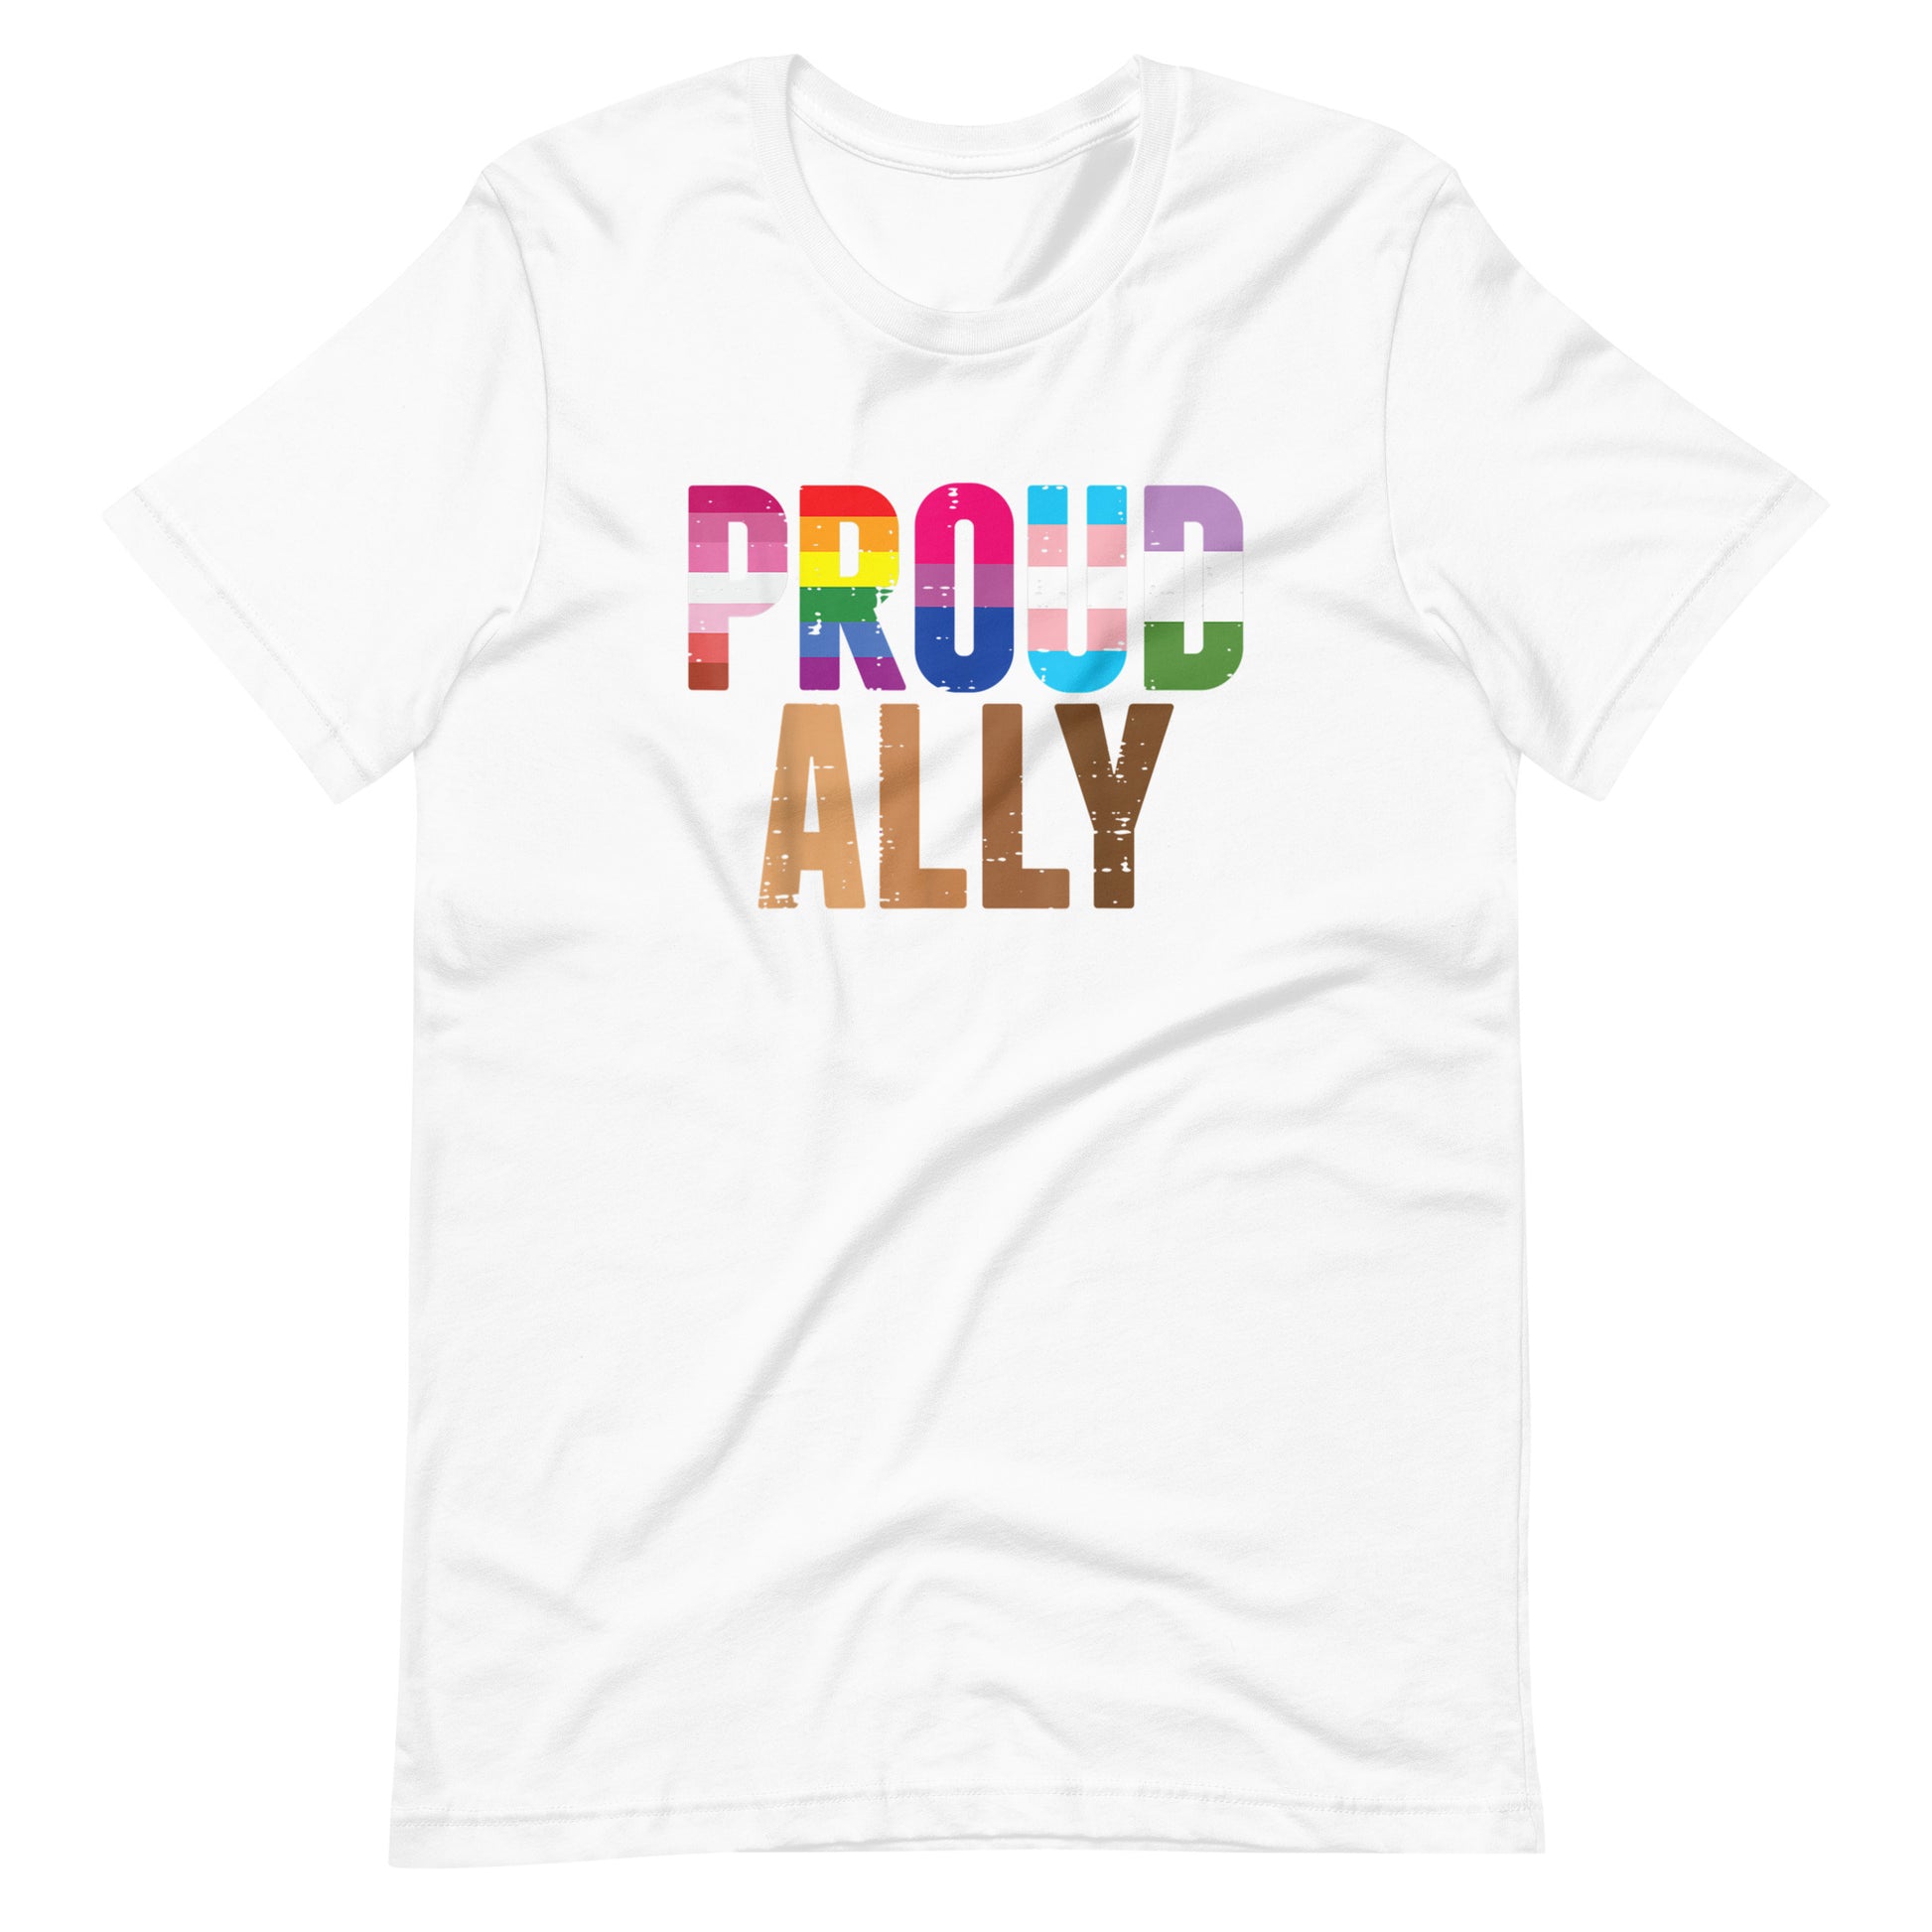 Proud Ally T-Shirt - gay pride apparel